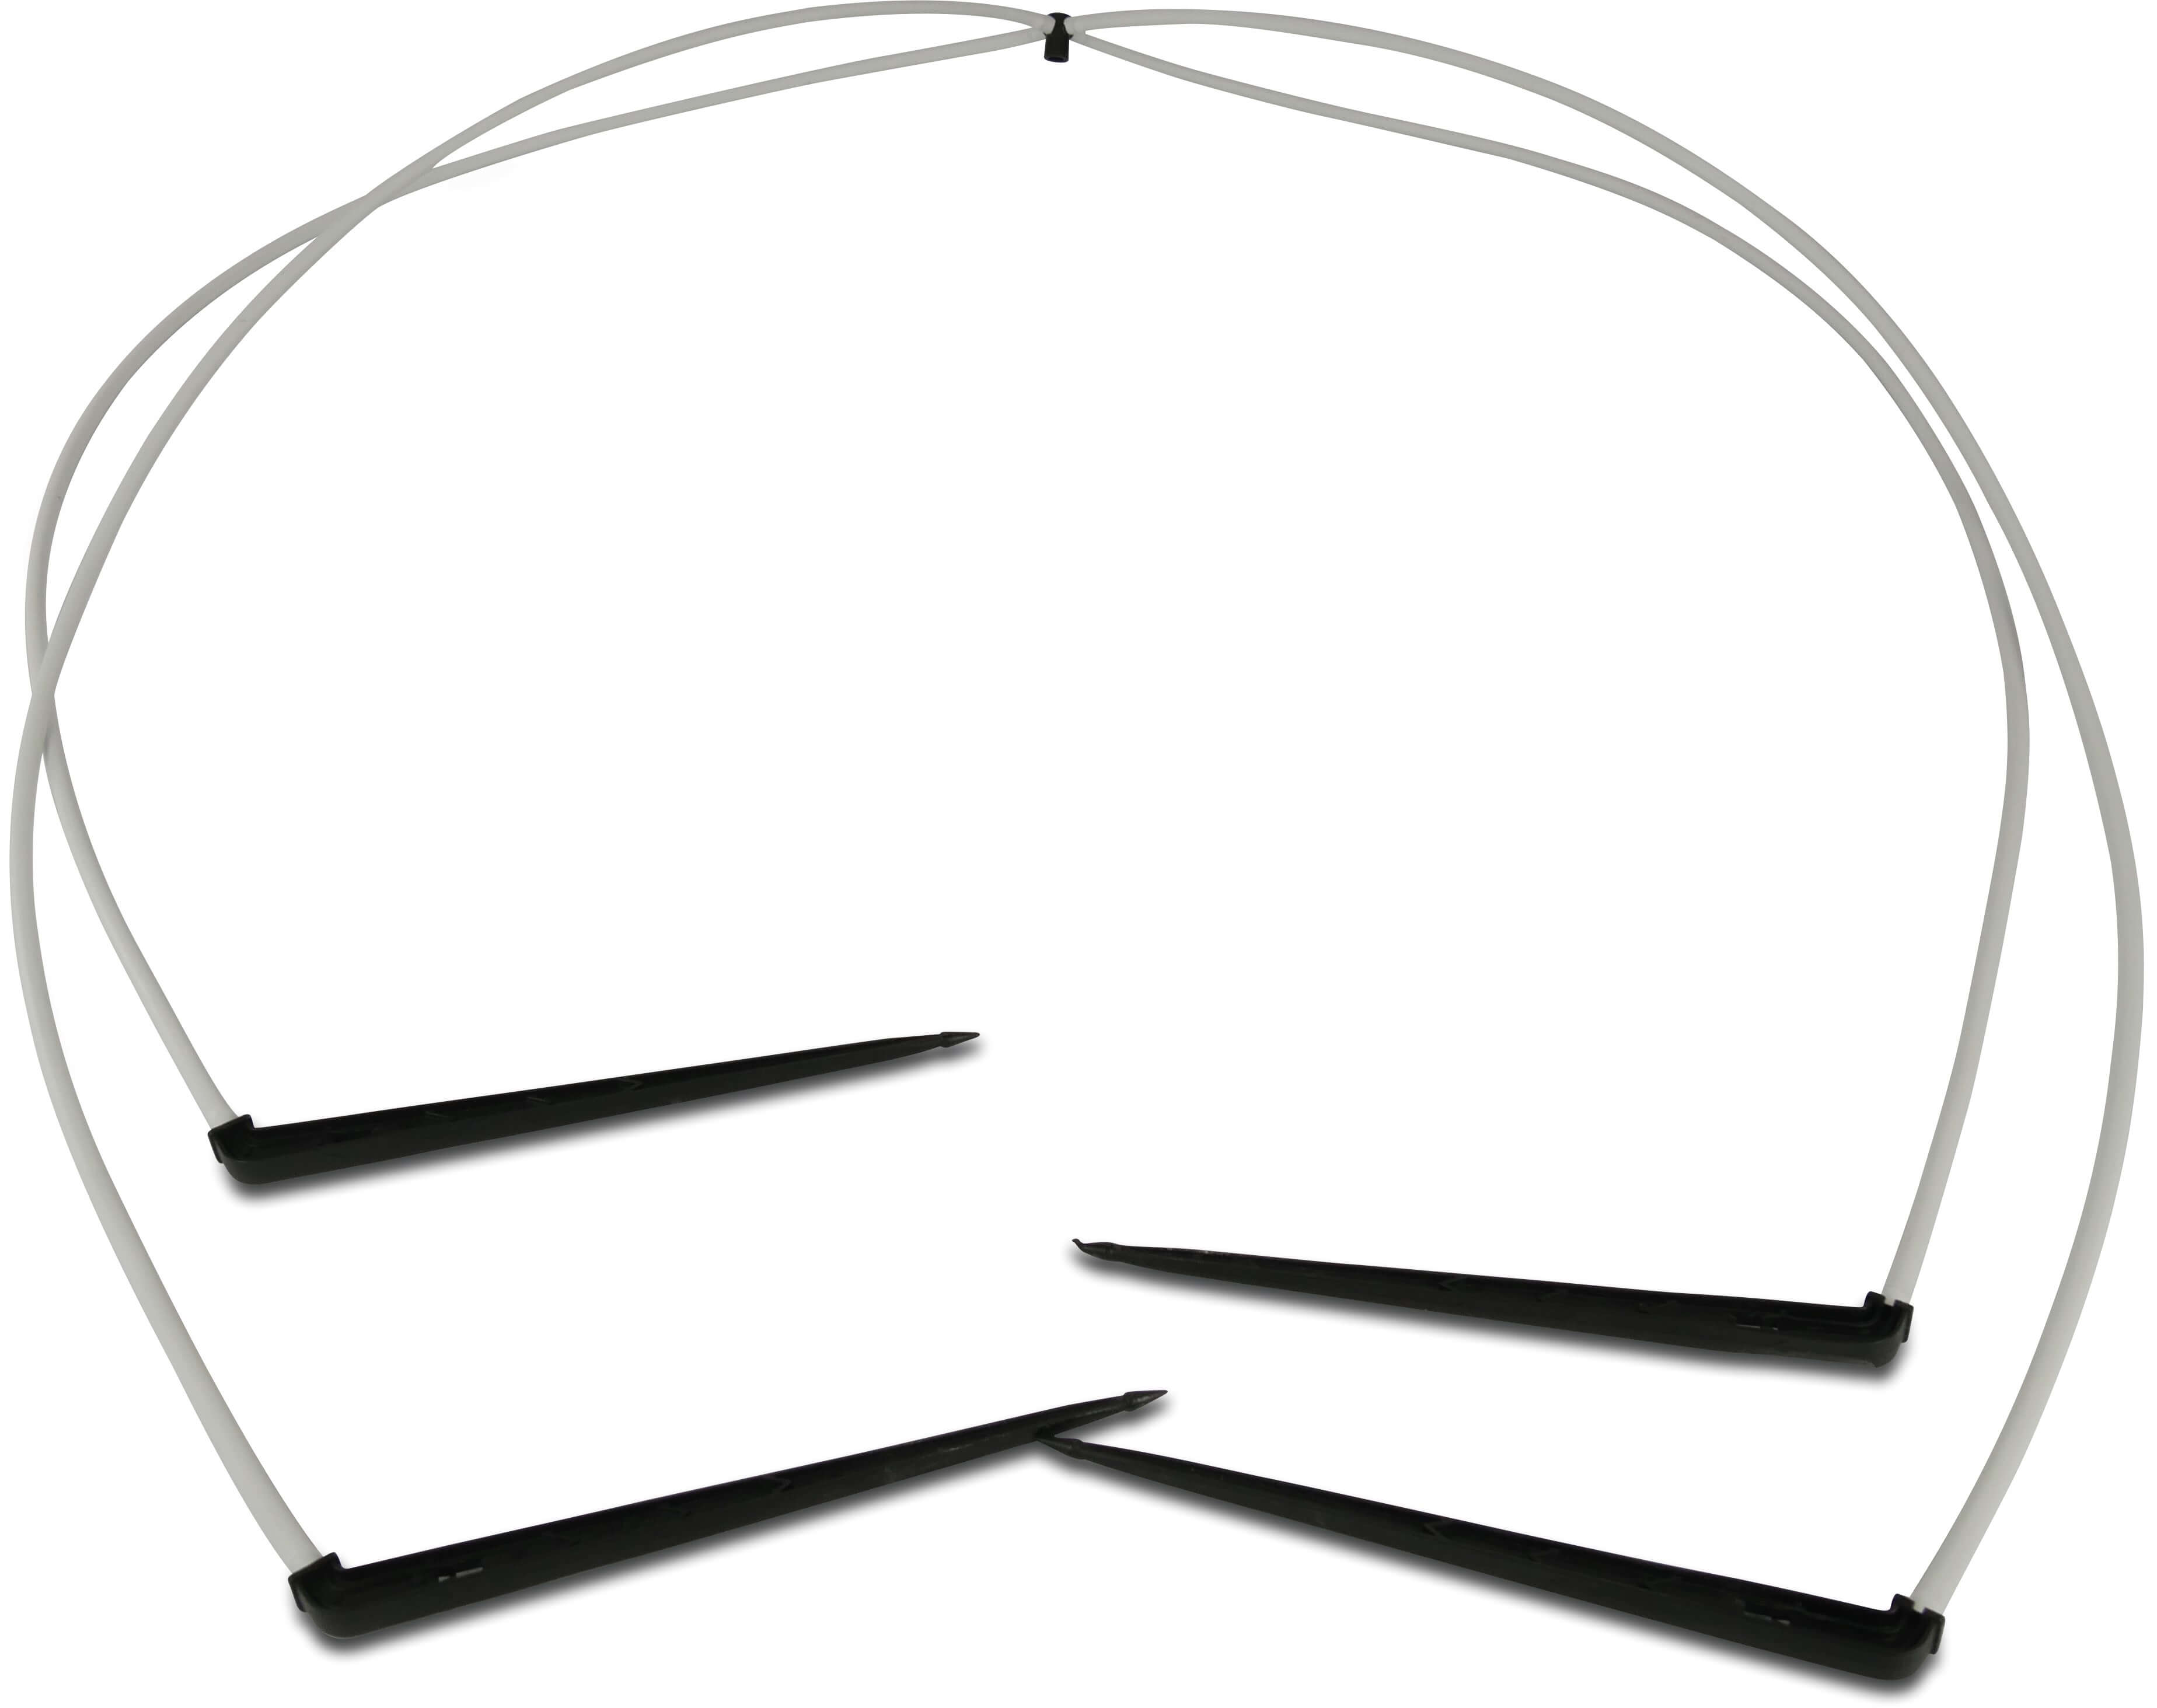 NaanDanJain 4-weg verdeler kunststof taper F 50cm zwart/wit type Click Tif, tubing with angle labyrinth stake